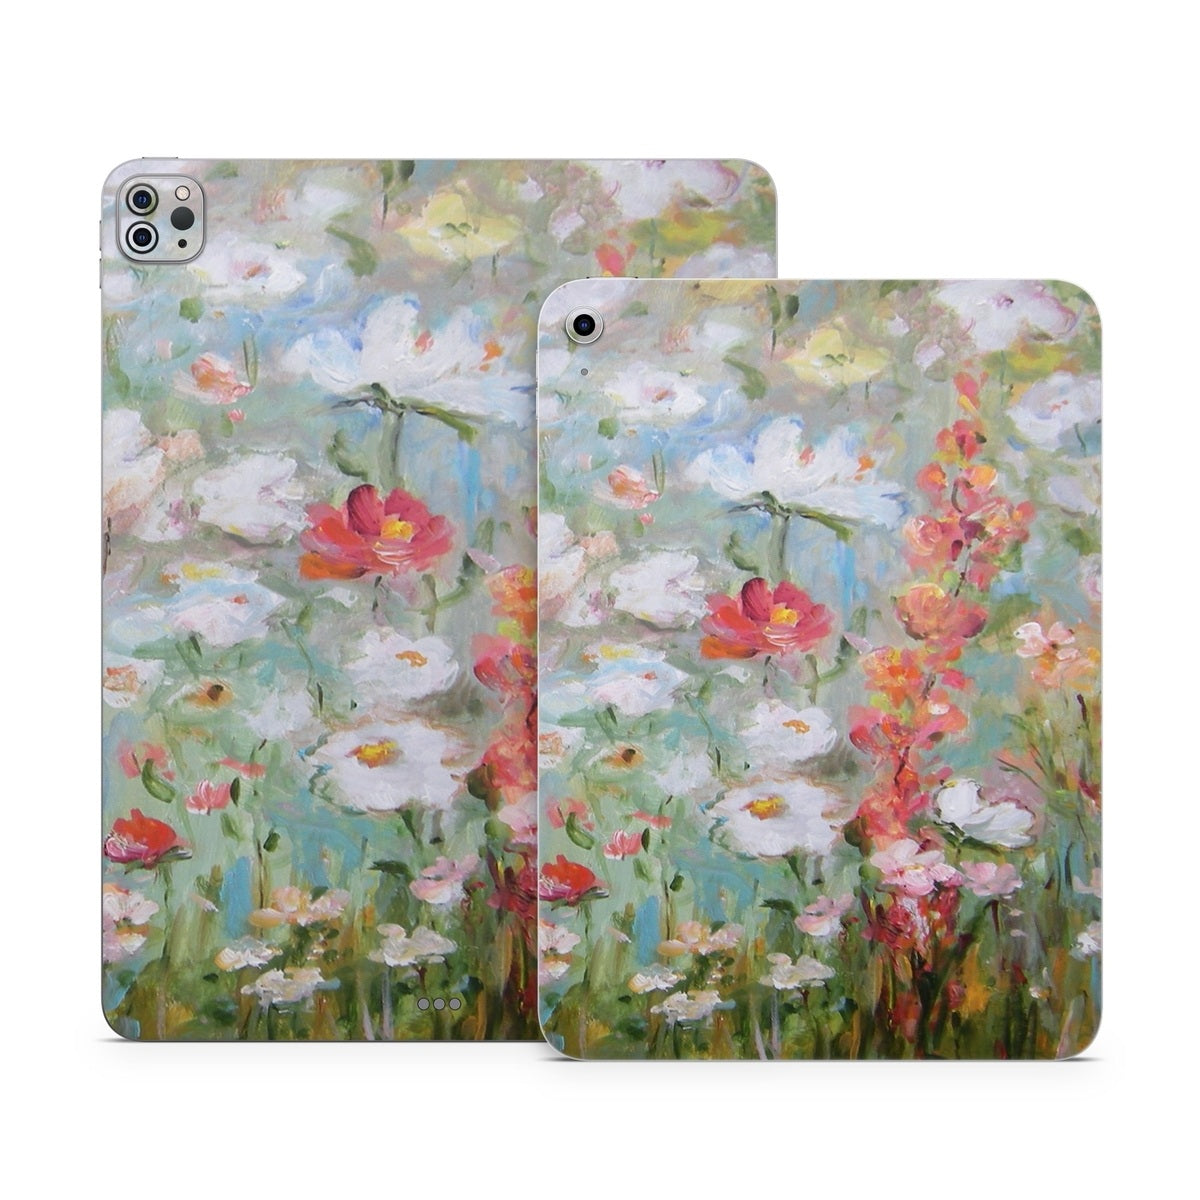 Flower Blooms - Apple iPad Skin